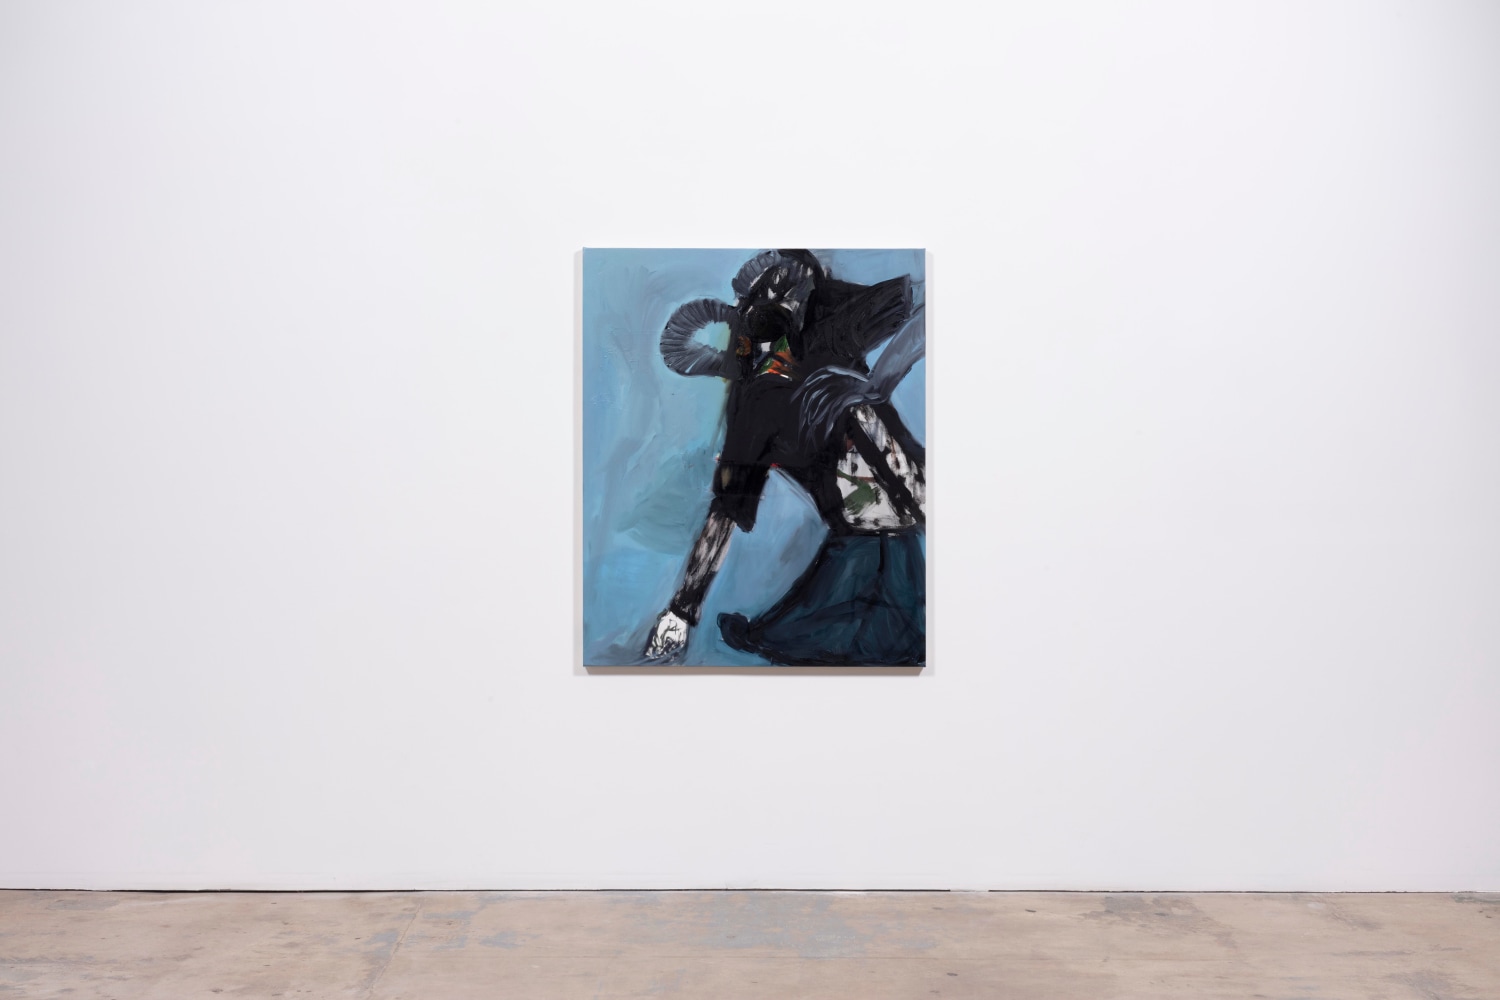 Stefania&amp;nbsp;Batoeva
Untitled, 2021
oil on canvas
54 x 44 in
137.15 x 111.75 cm